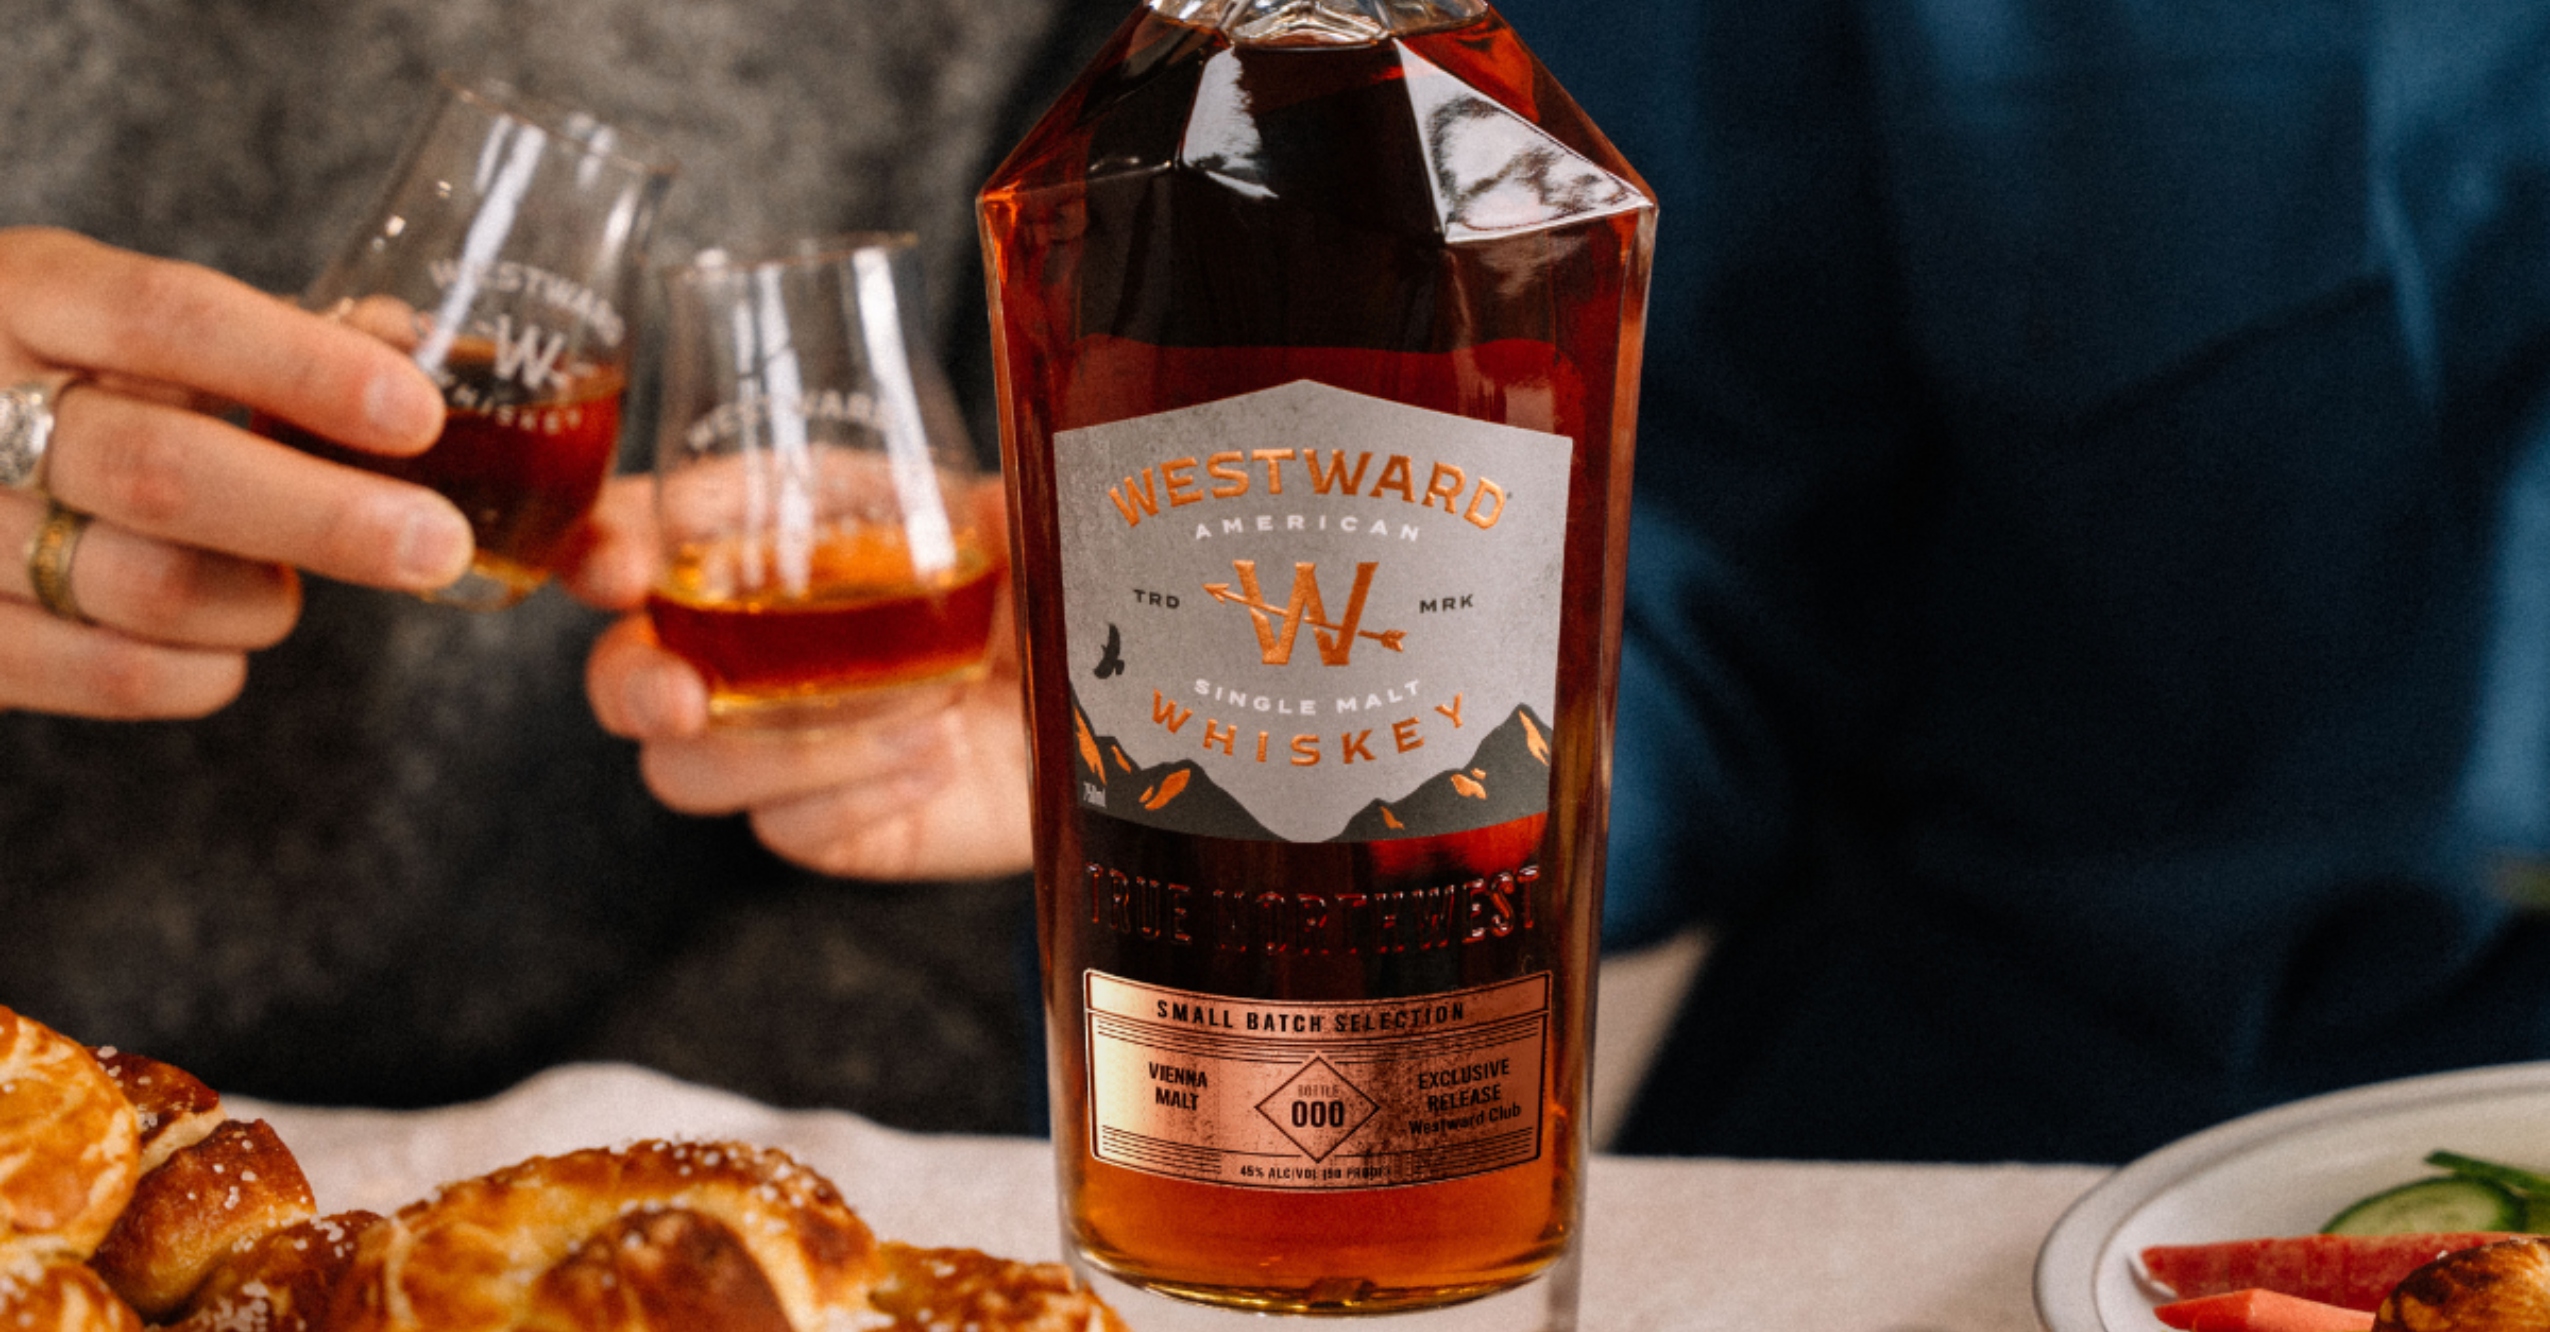 Spirit Of The Week: Westward ‘Vienna Malt’ American Single Malt Whiskey